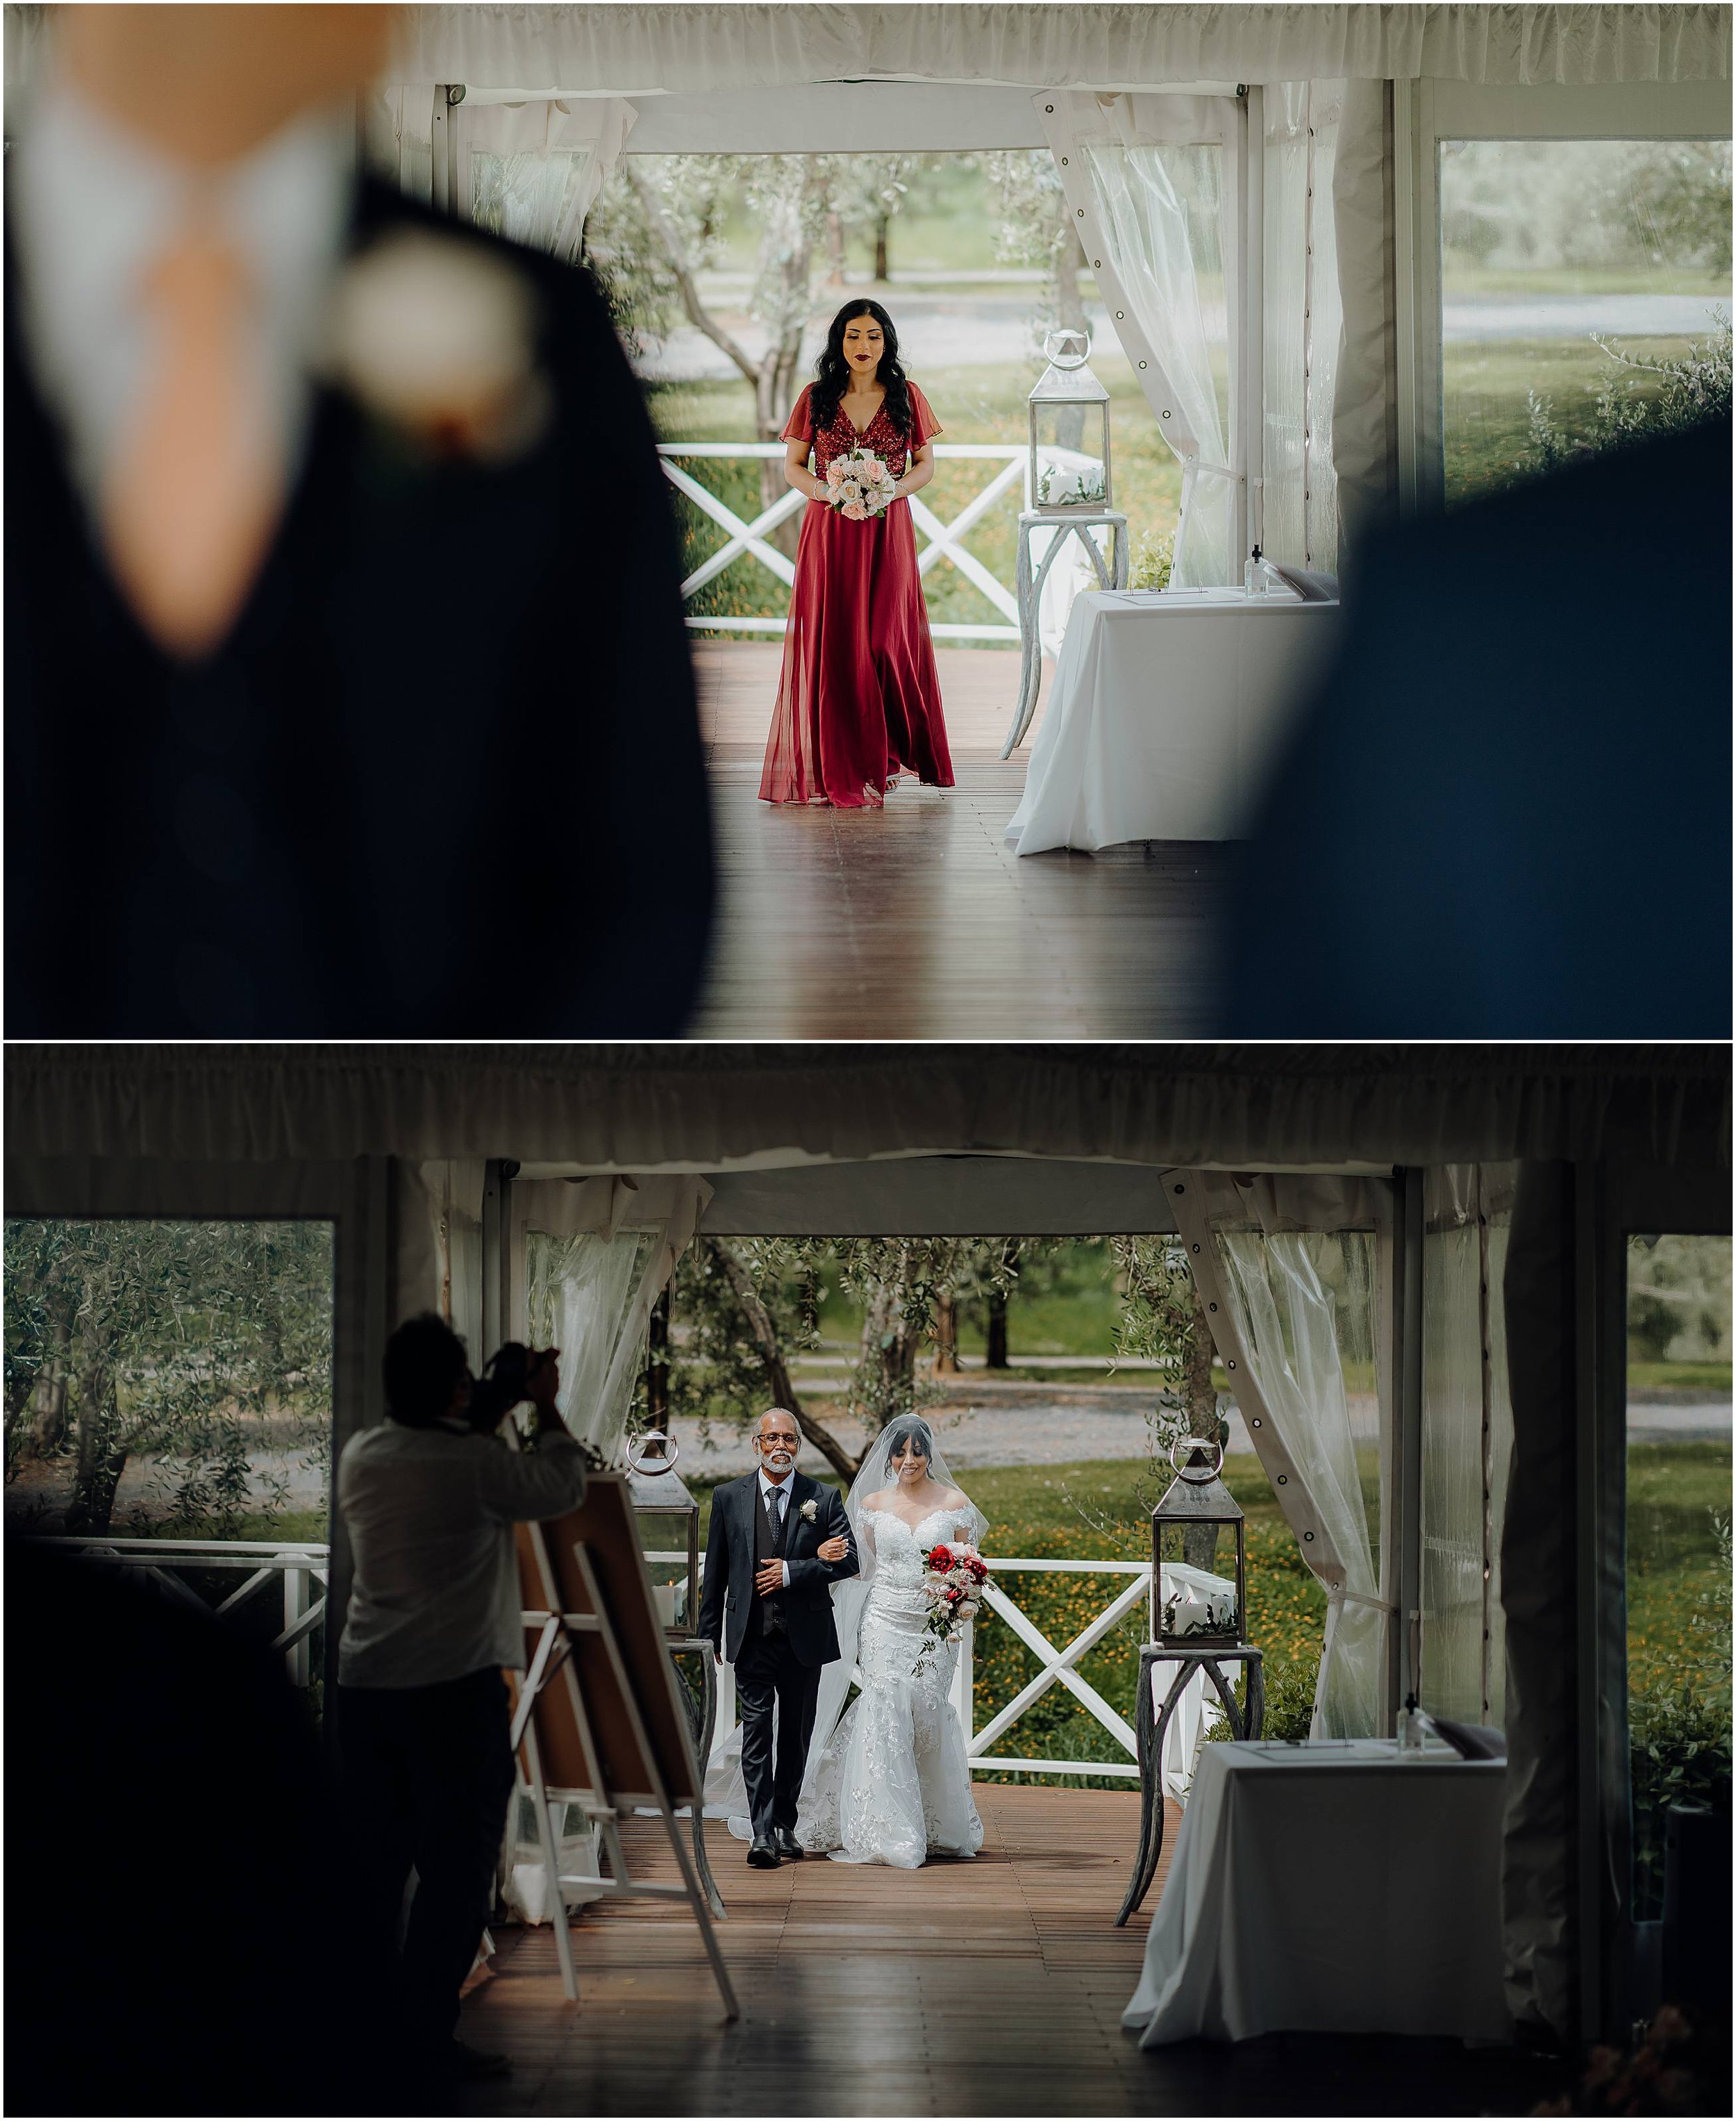 Kouki+Auckland+Wedding+Photographer+New+Zealand+Queenstown+Wedding+Elopement+NZ+Markovina+estate_0025.jpg